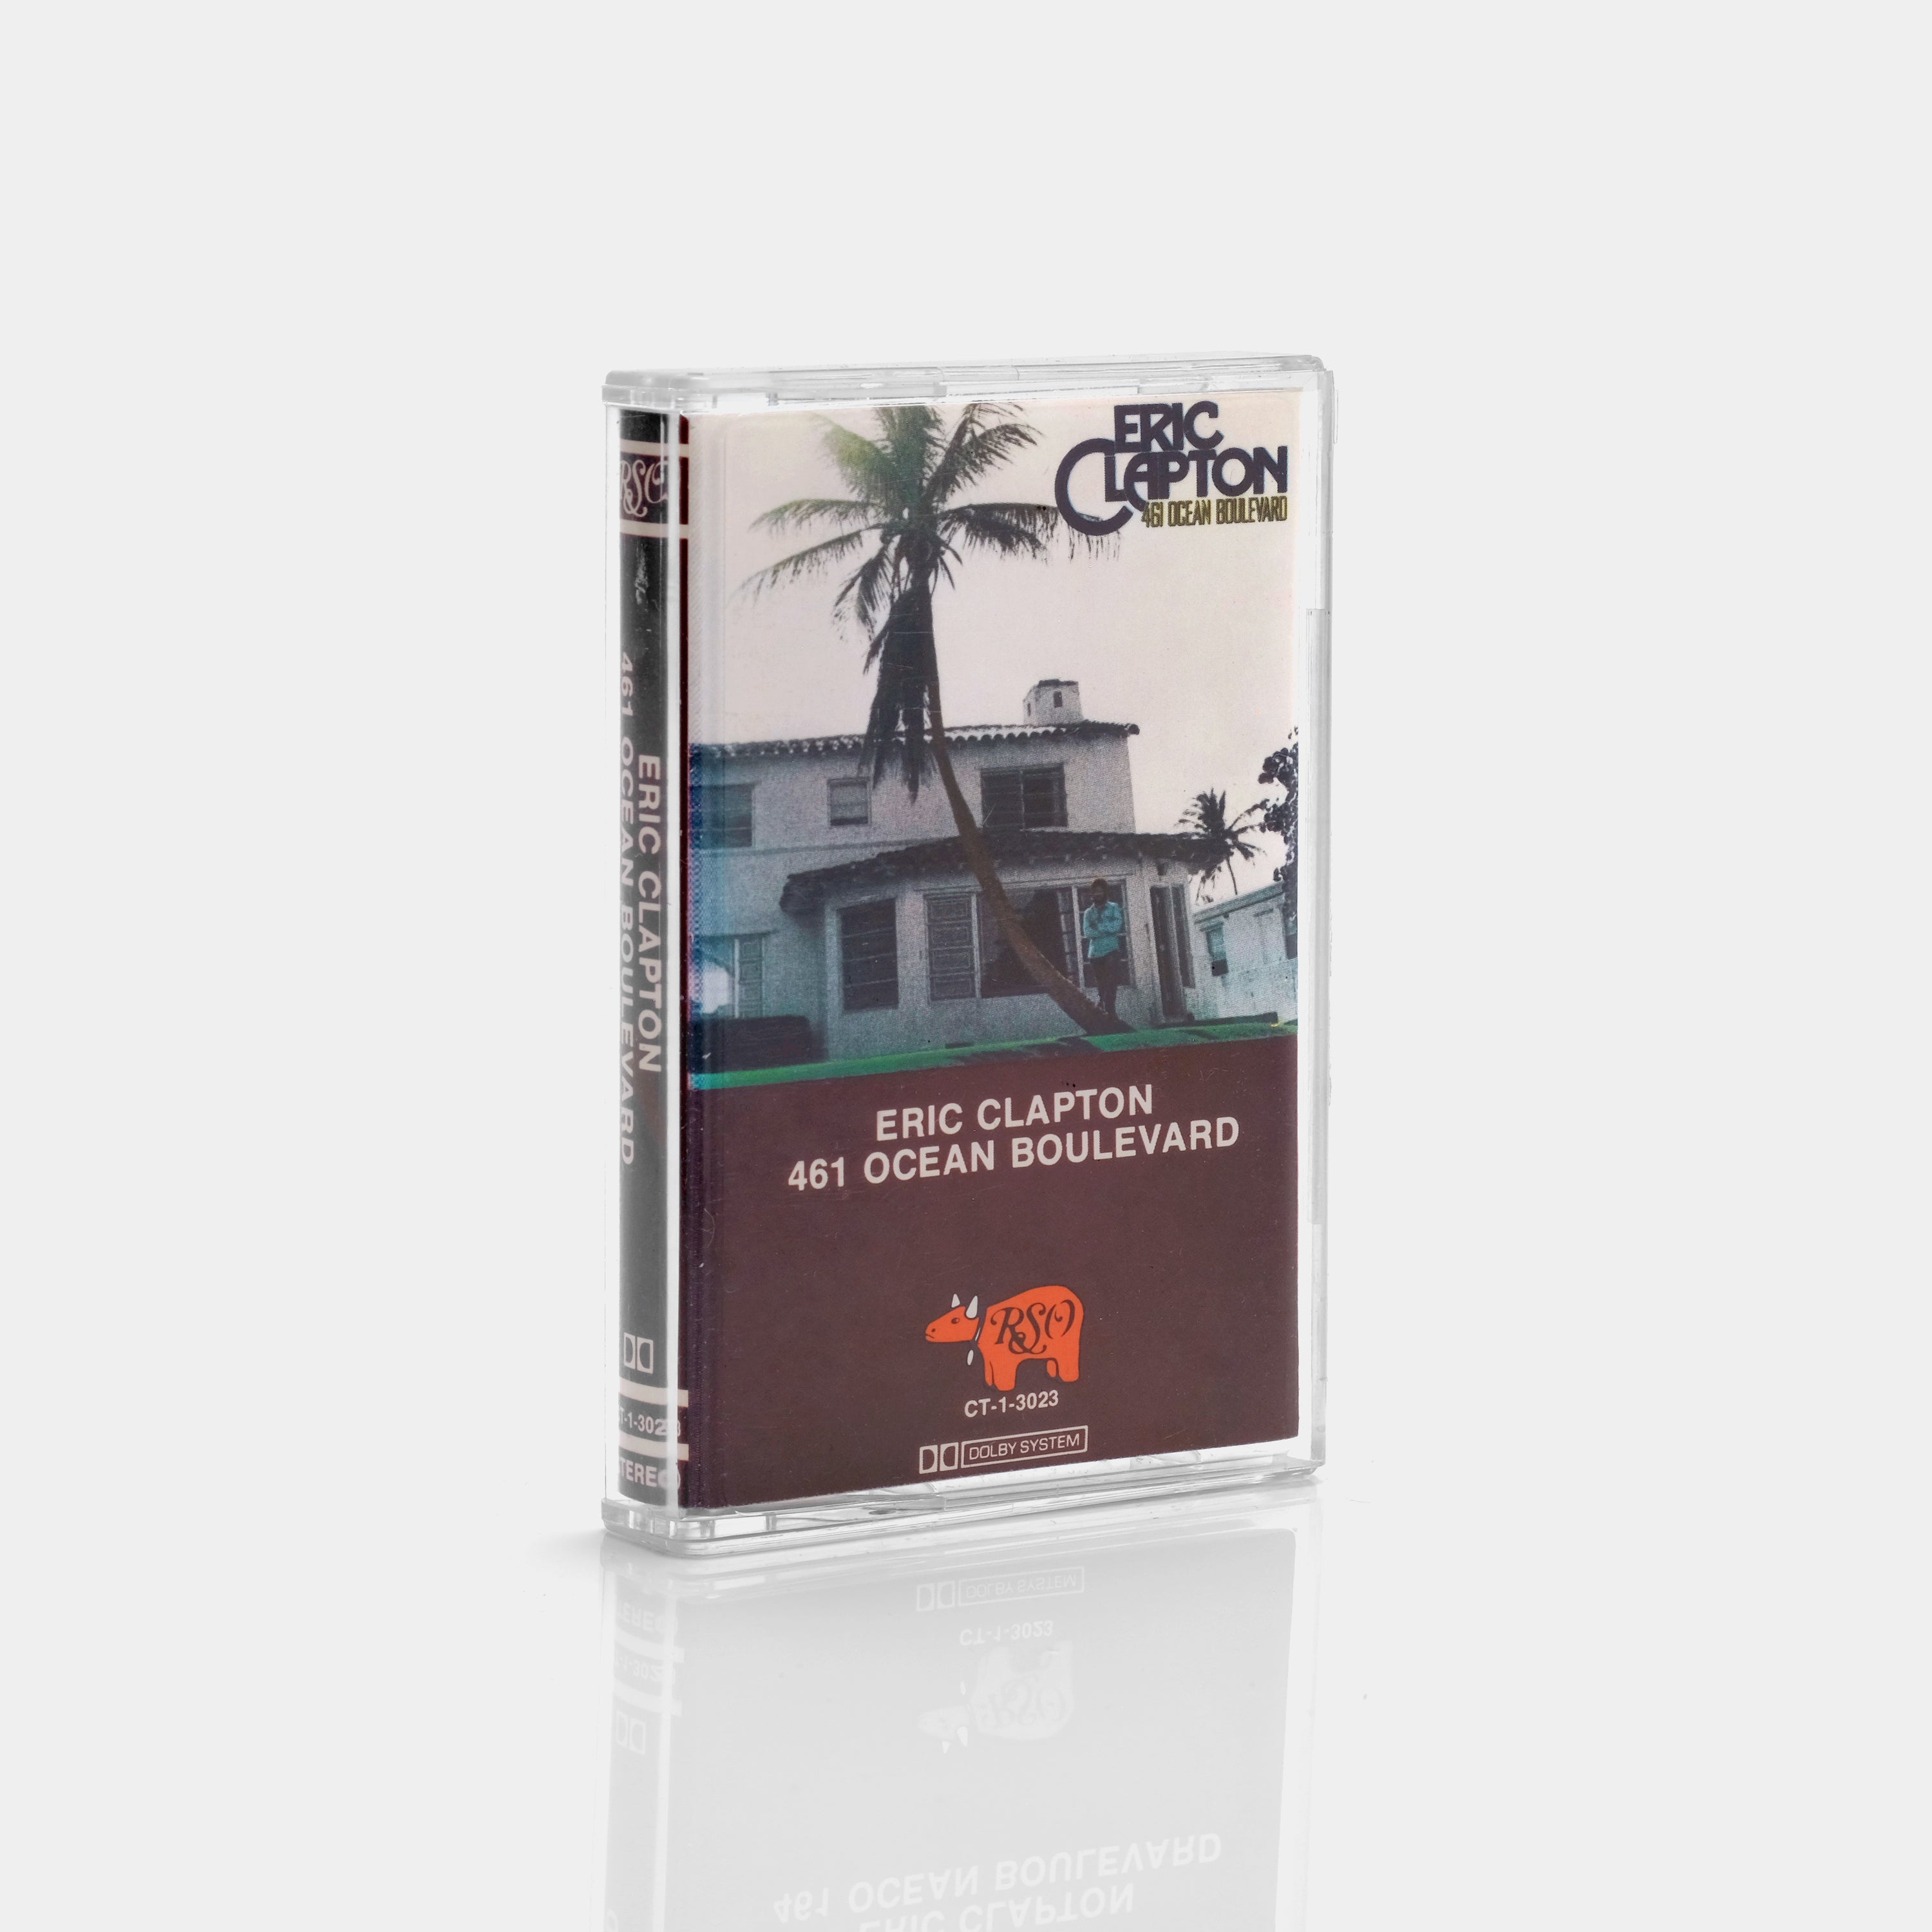 Eric Clapton - 461 Ocean Boulevard Cassette Tape